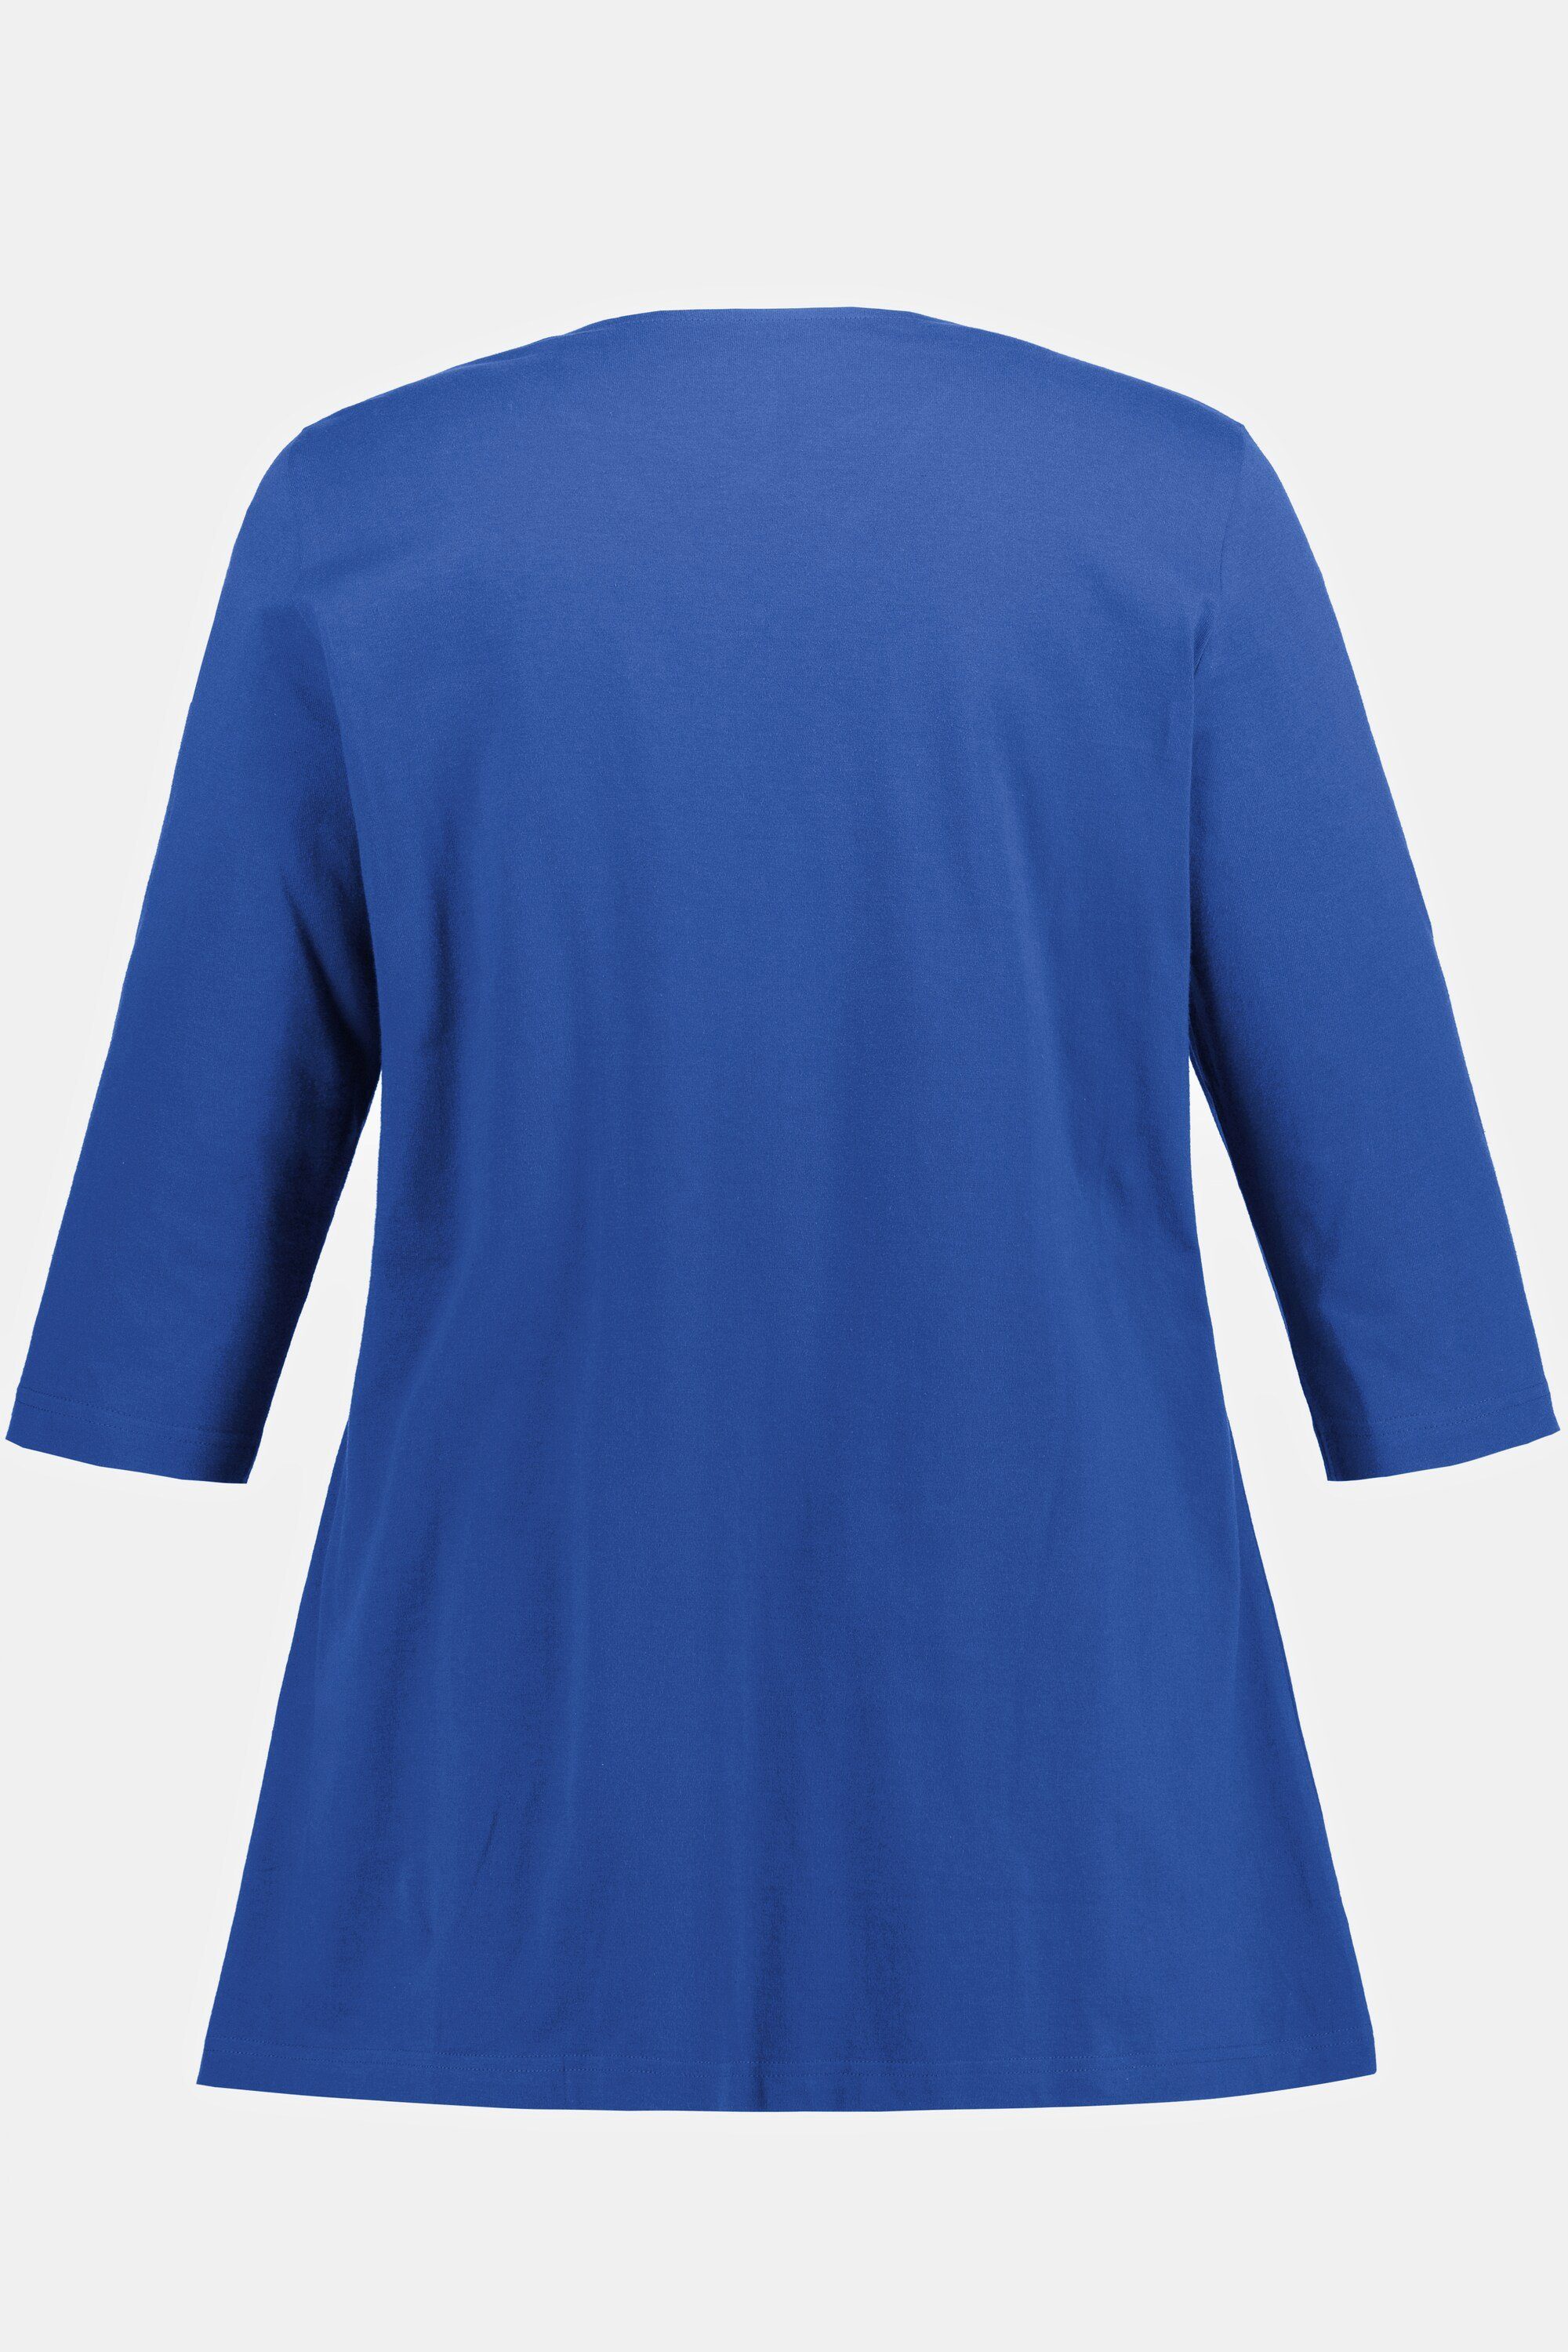 Longshirt tintenblau Rundhals Popken A-Linie 3/4-Arm Longshirt Ulla